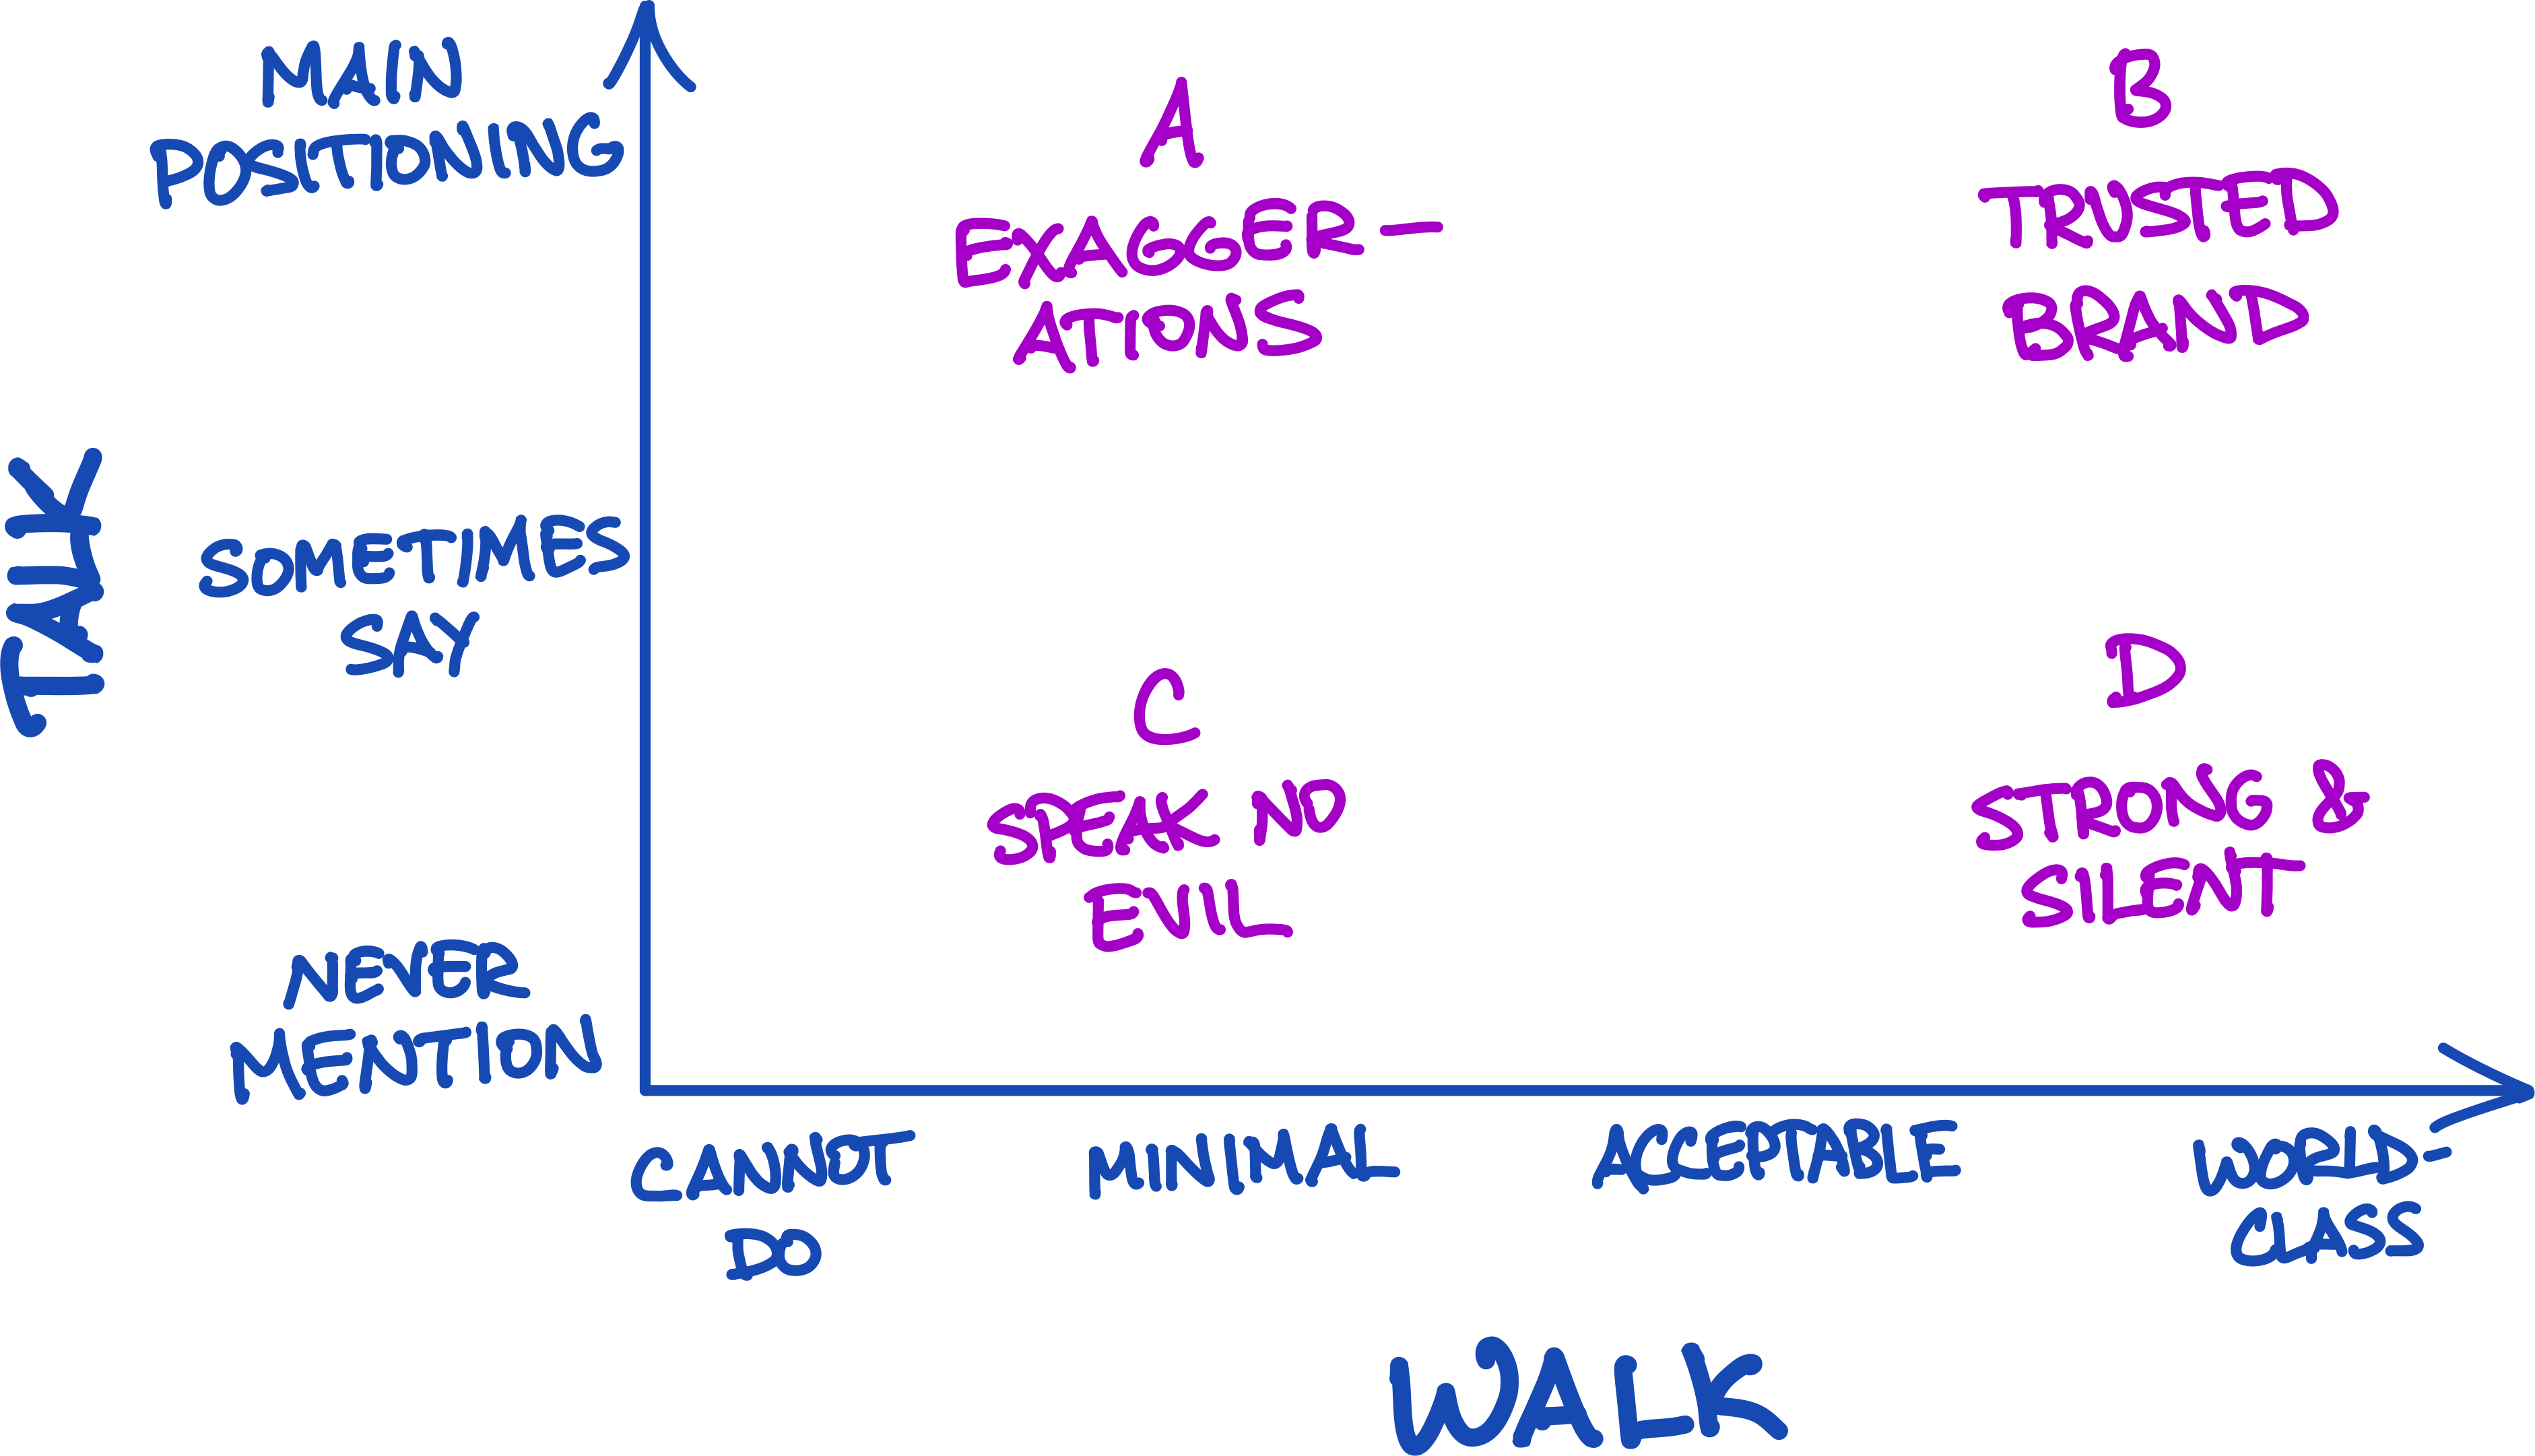 The four quadrants of the Talk/Walk Framework